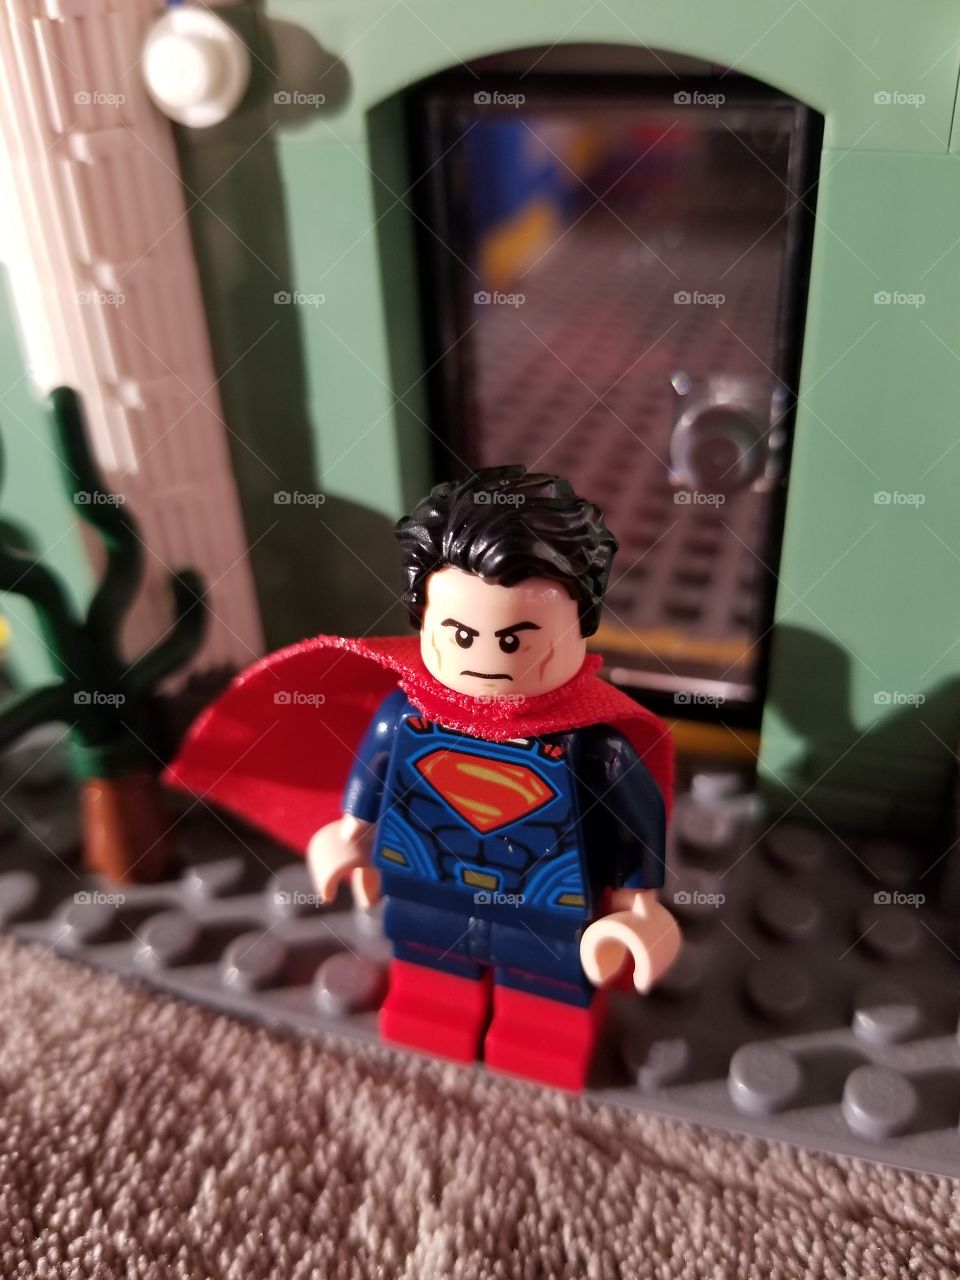 Superman standing